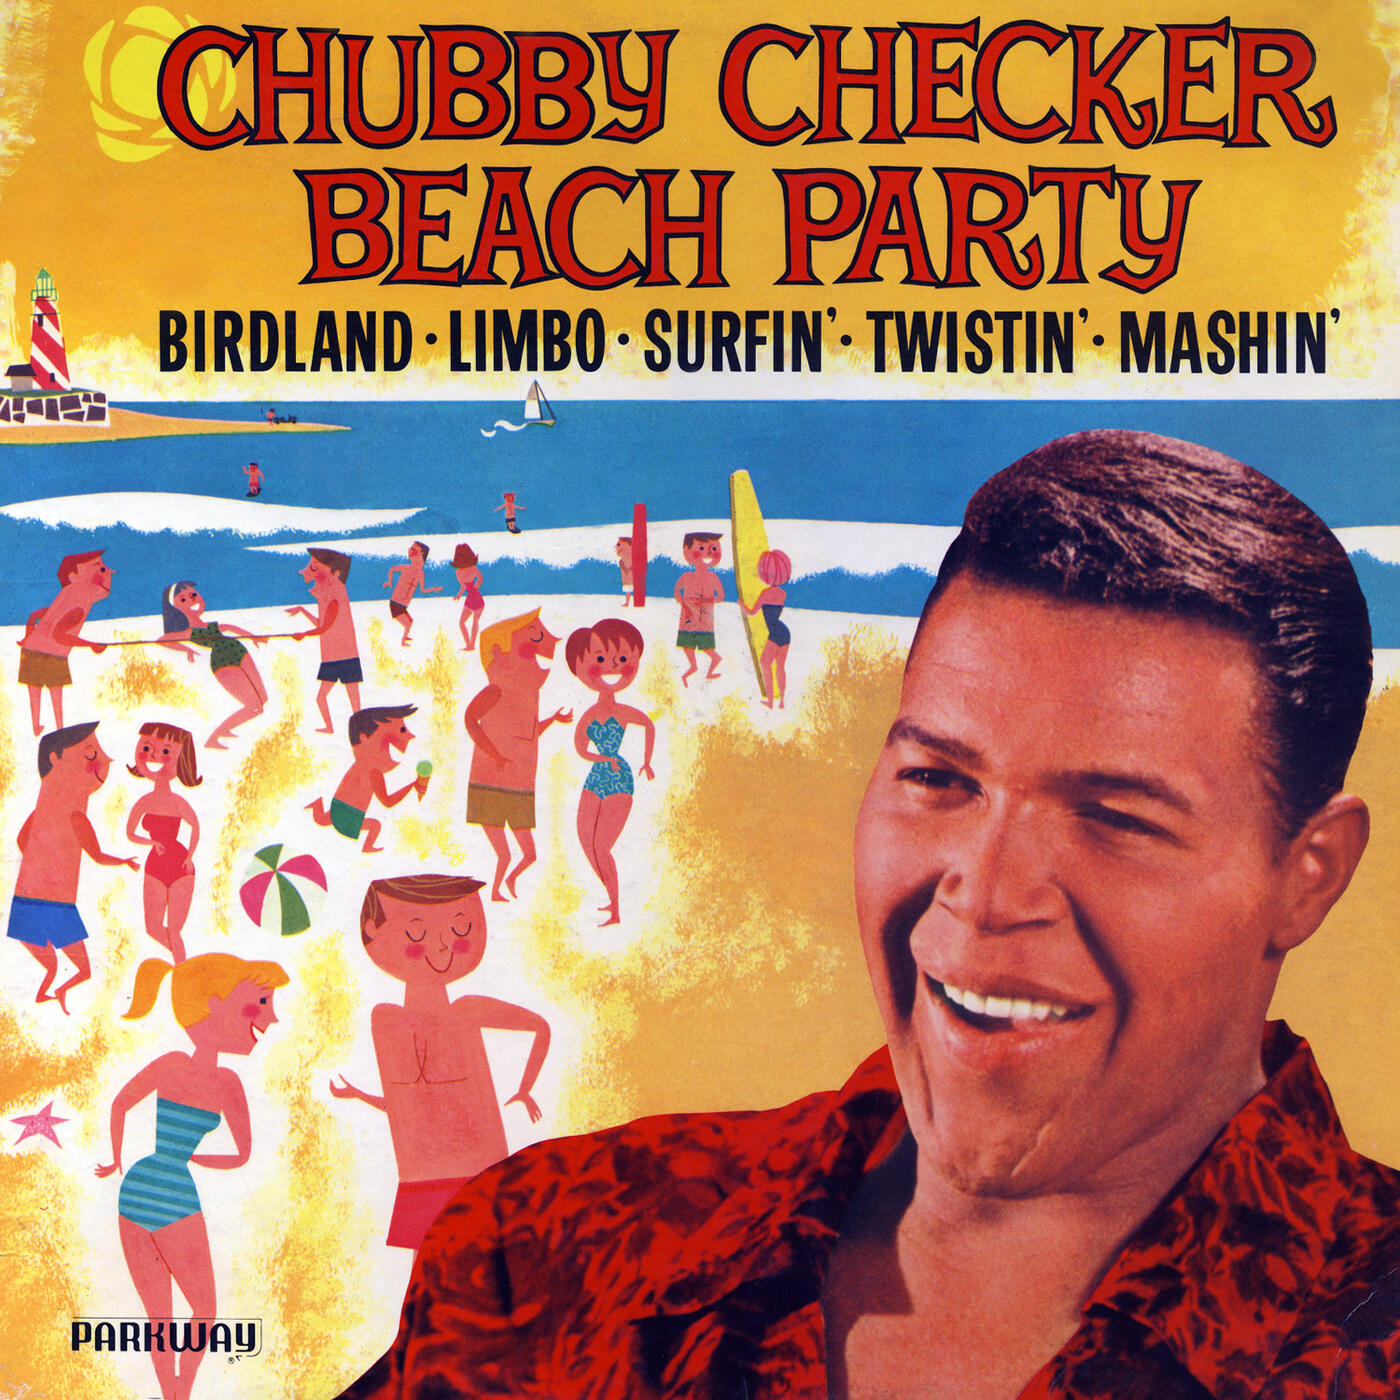 Chubby Checker Beach Party Iheartradio 